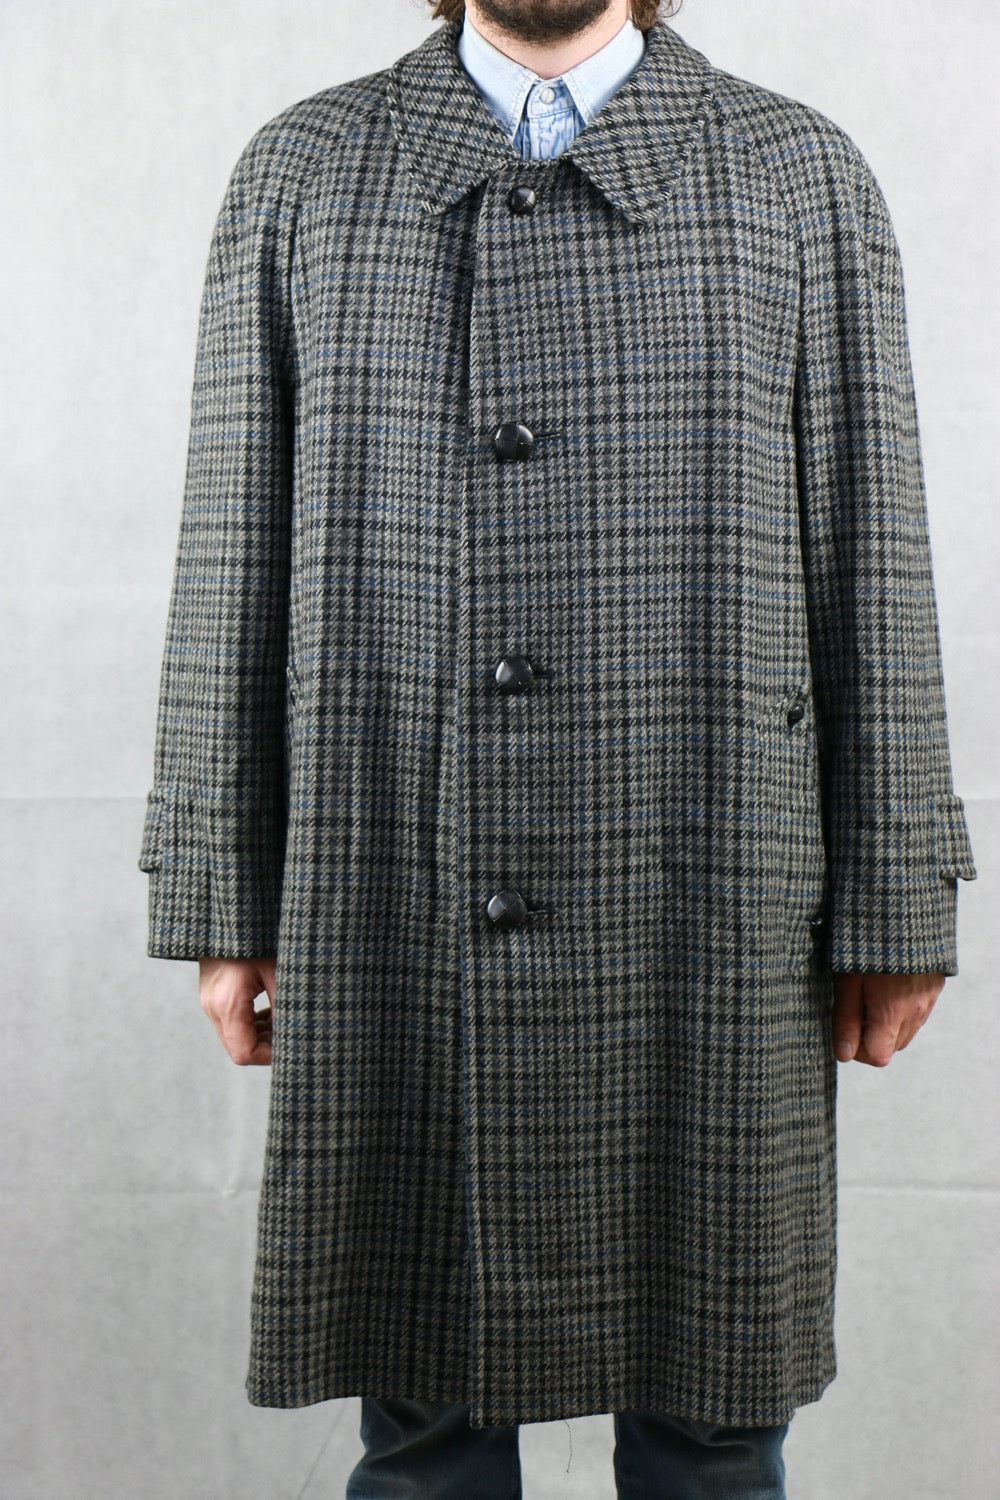 Aquascutum Checkered Wool Coat - vintage clothing clochard92.com